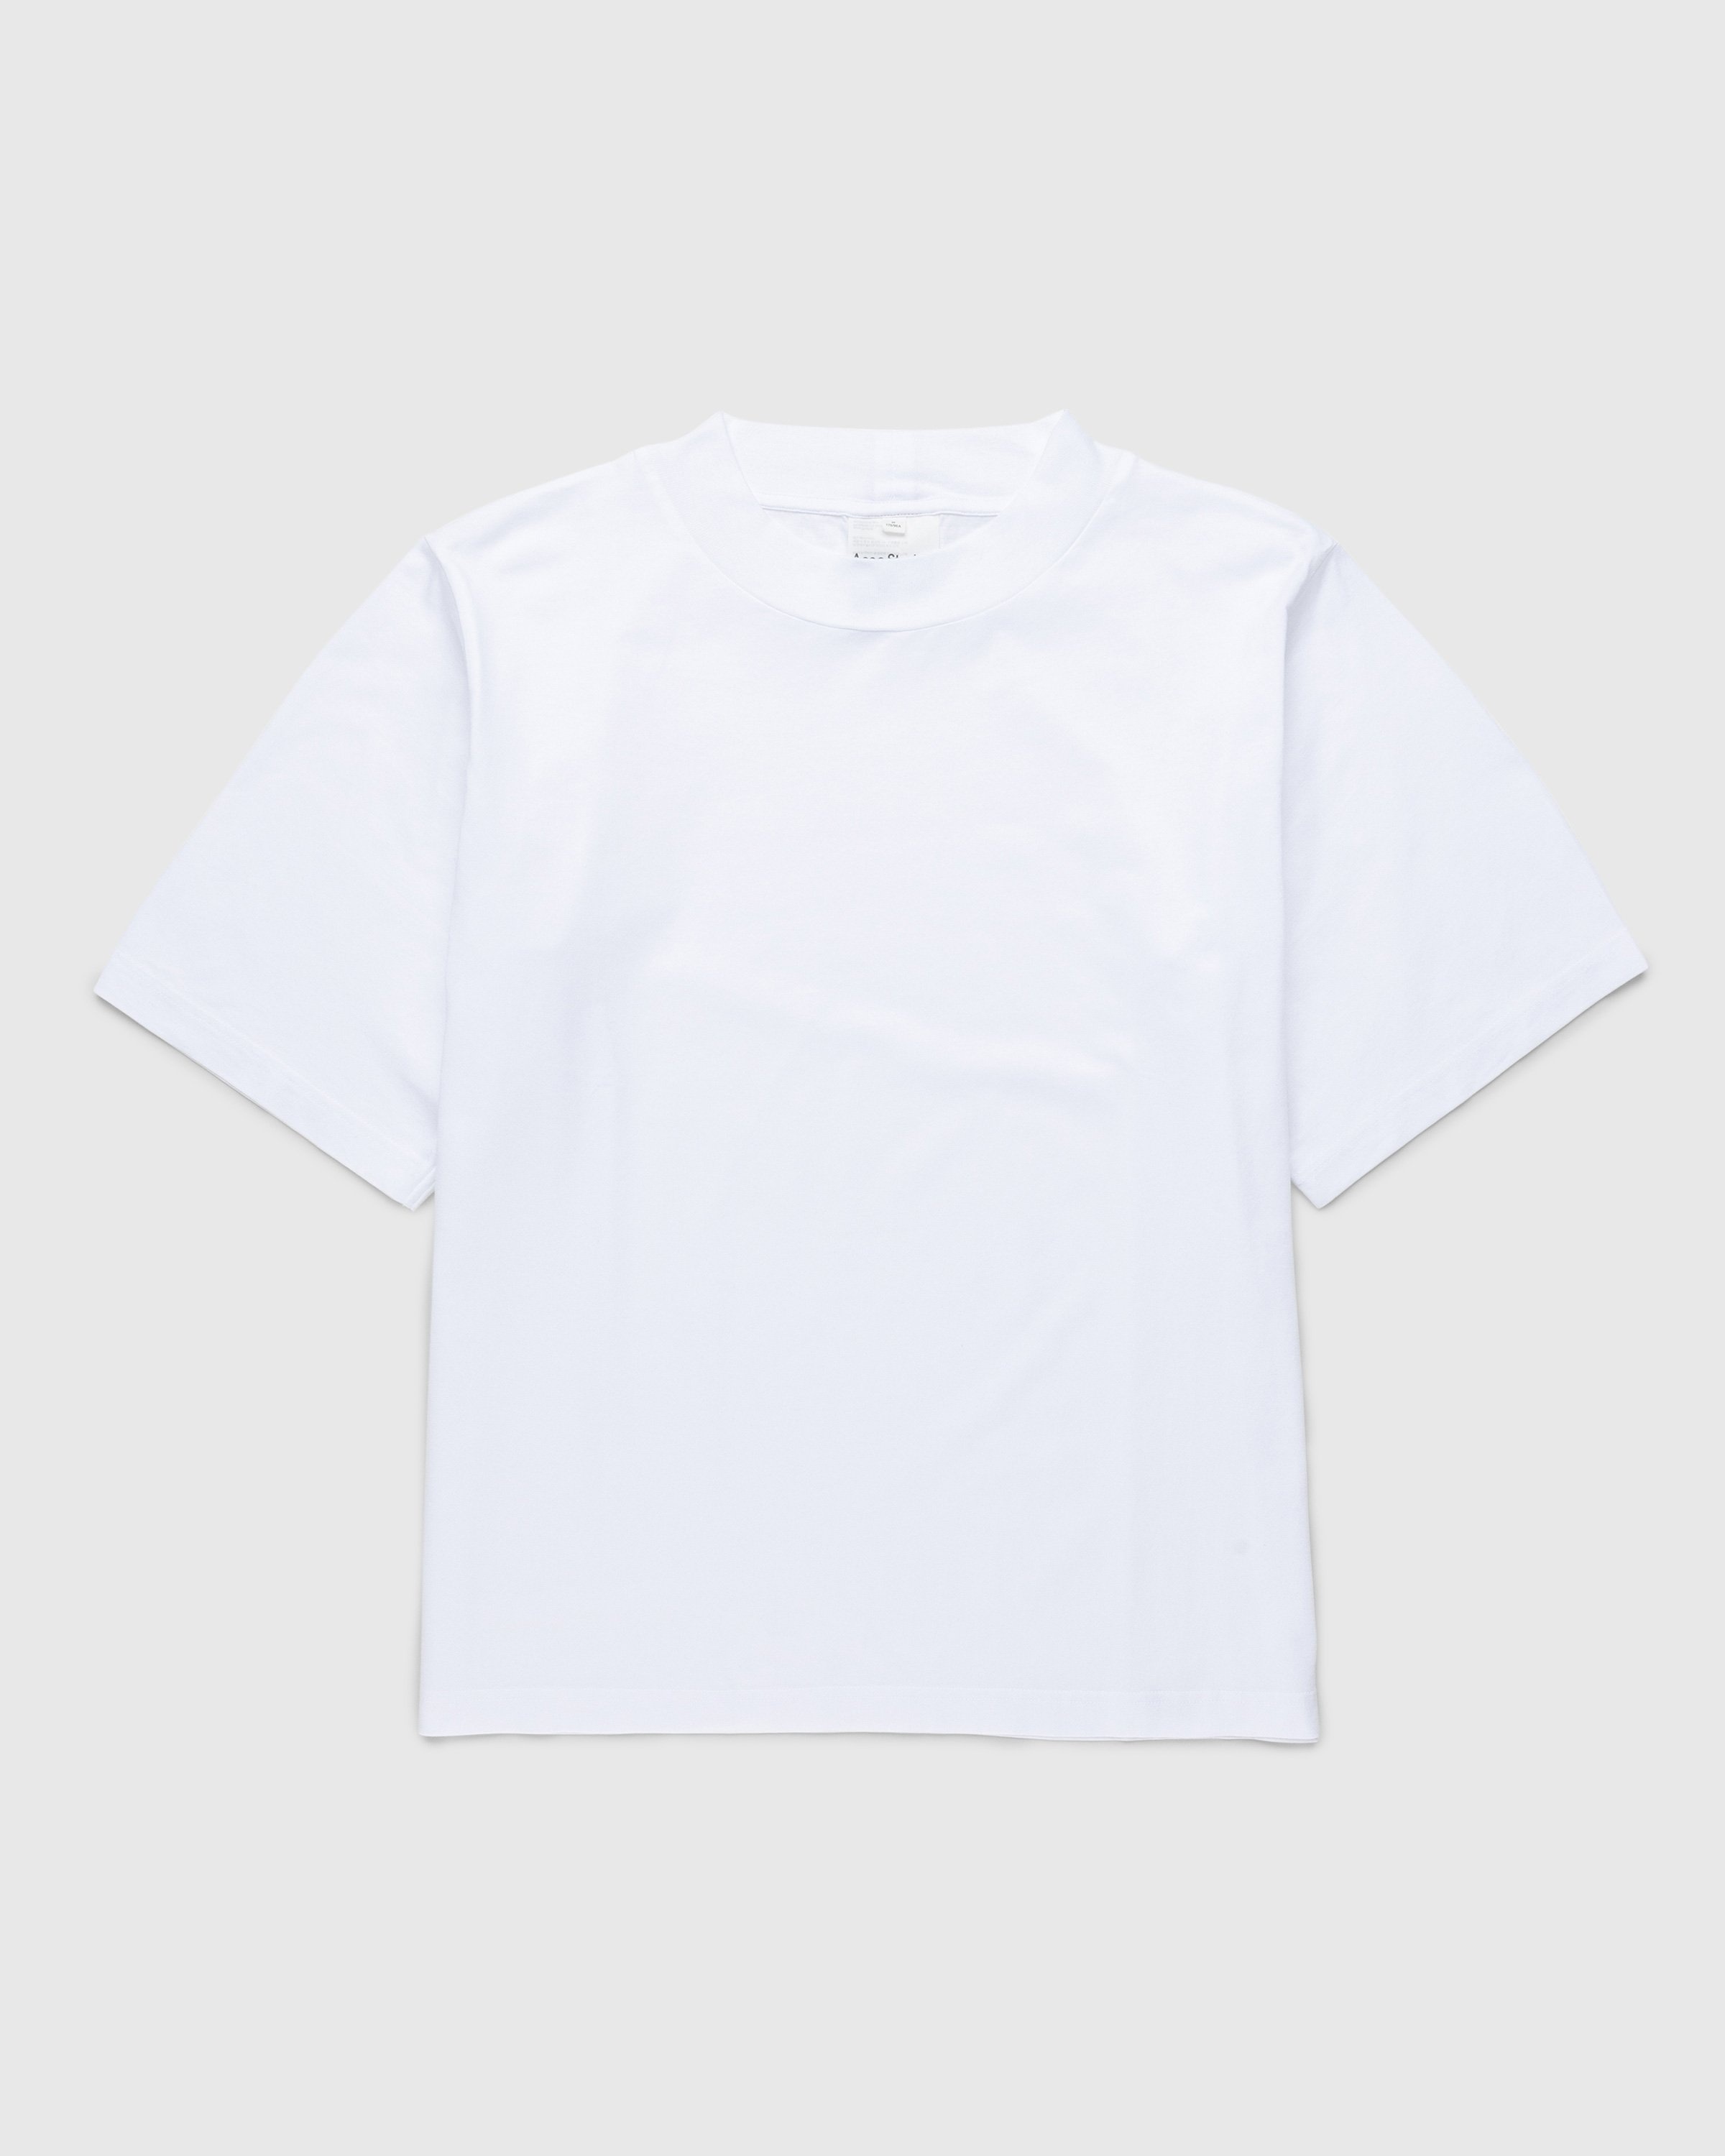 Acne Studios – Crewneck T-Shirt Optic White - Tops - White - Image 1